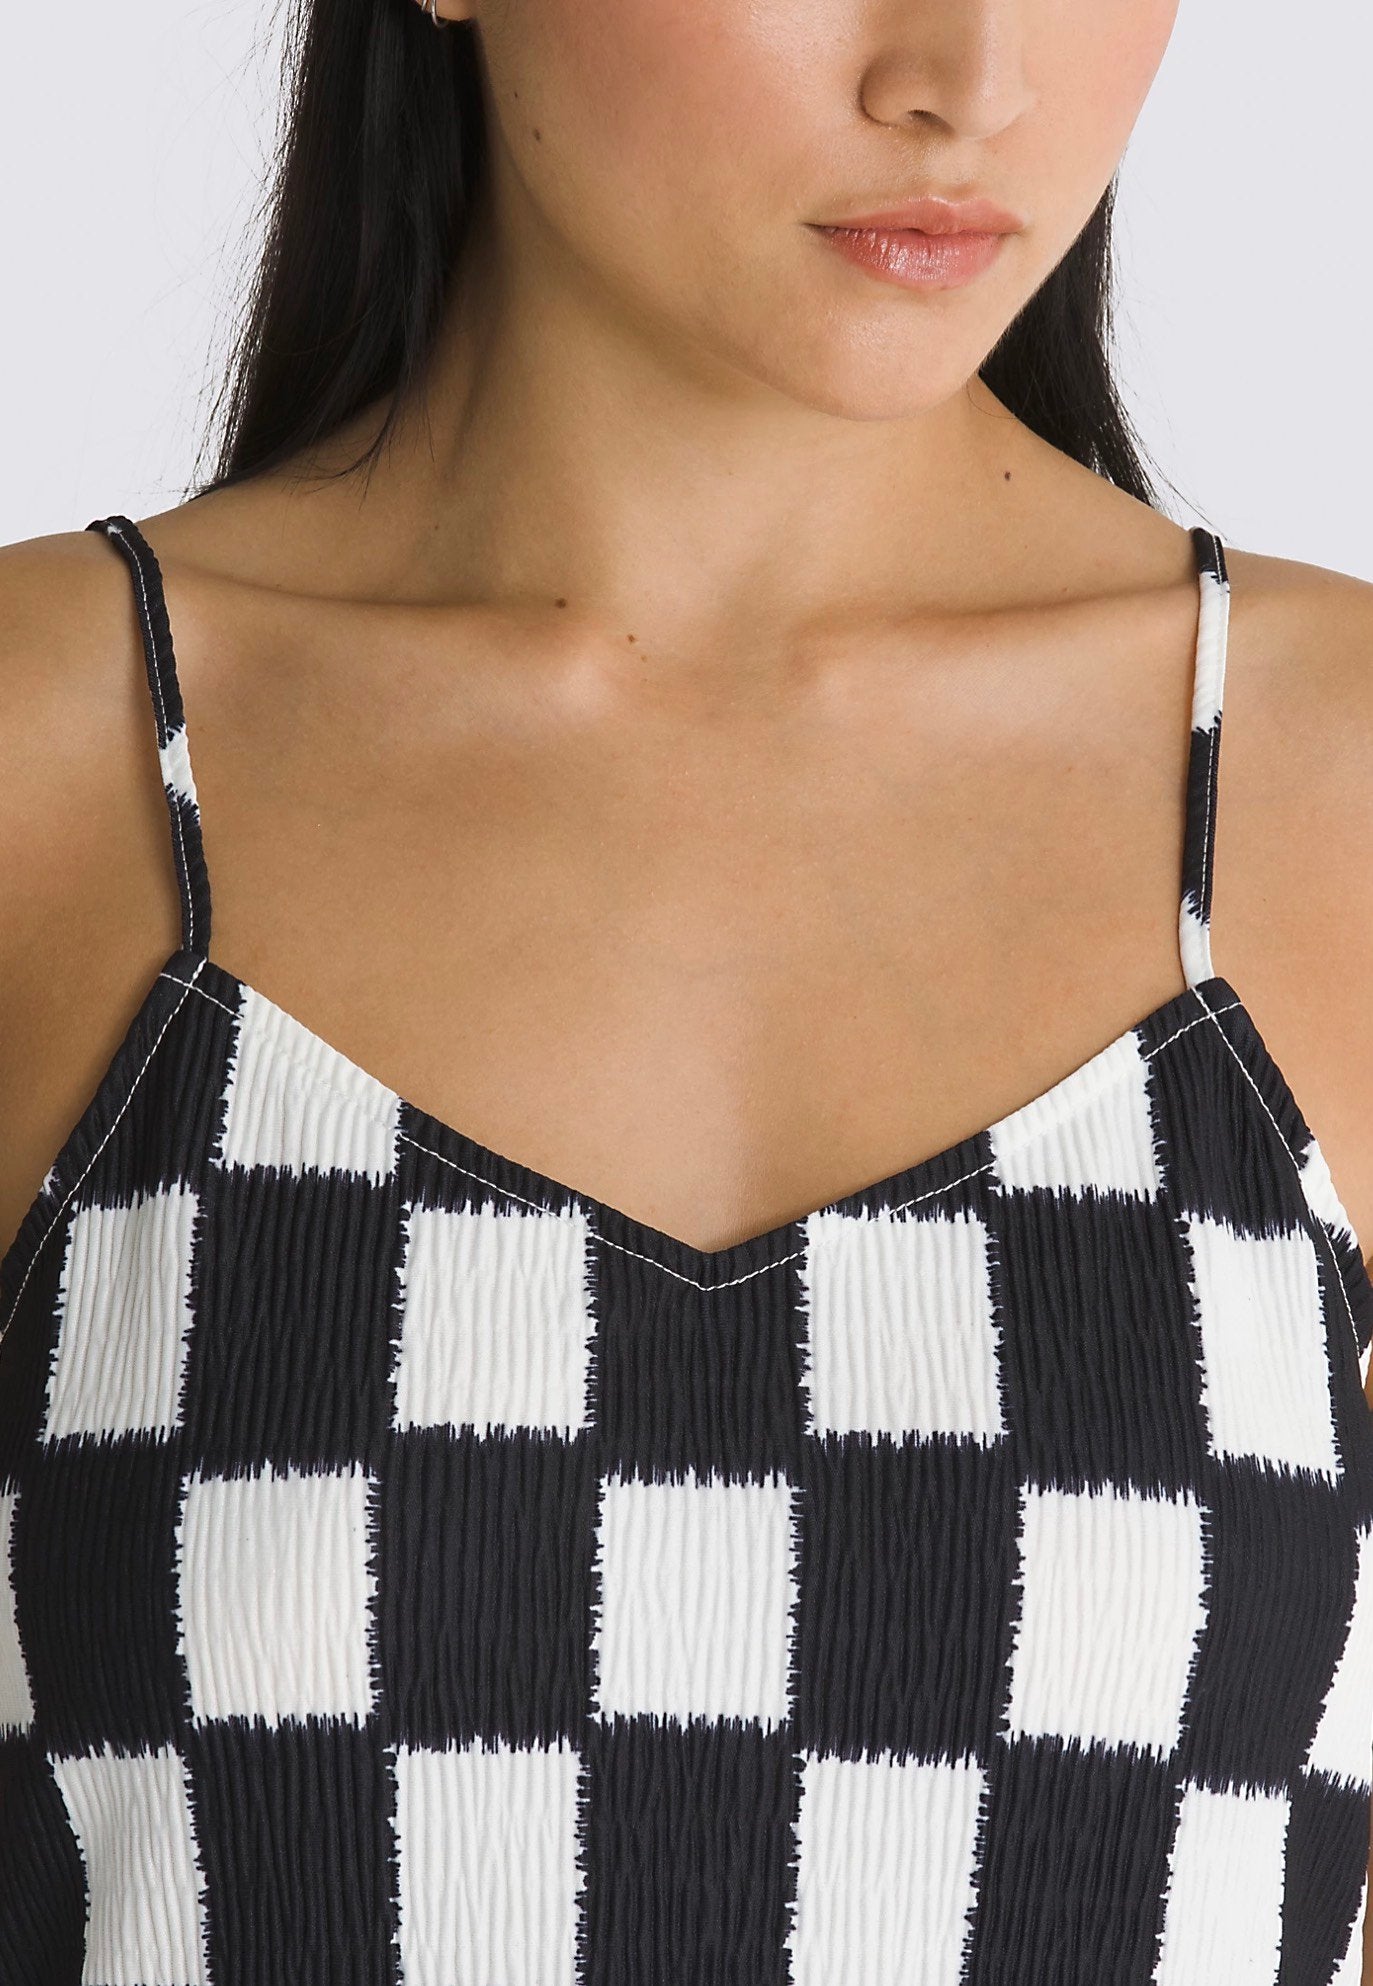 Vans - Benton Checker Cami Black/Marshmallow - Dress